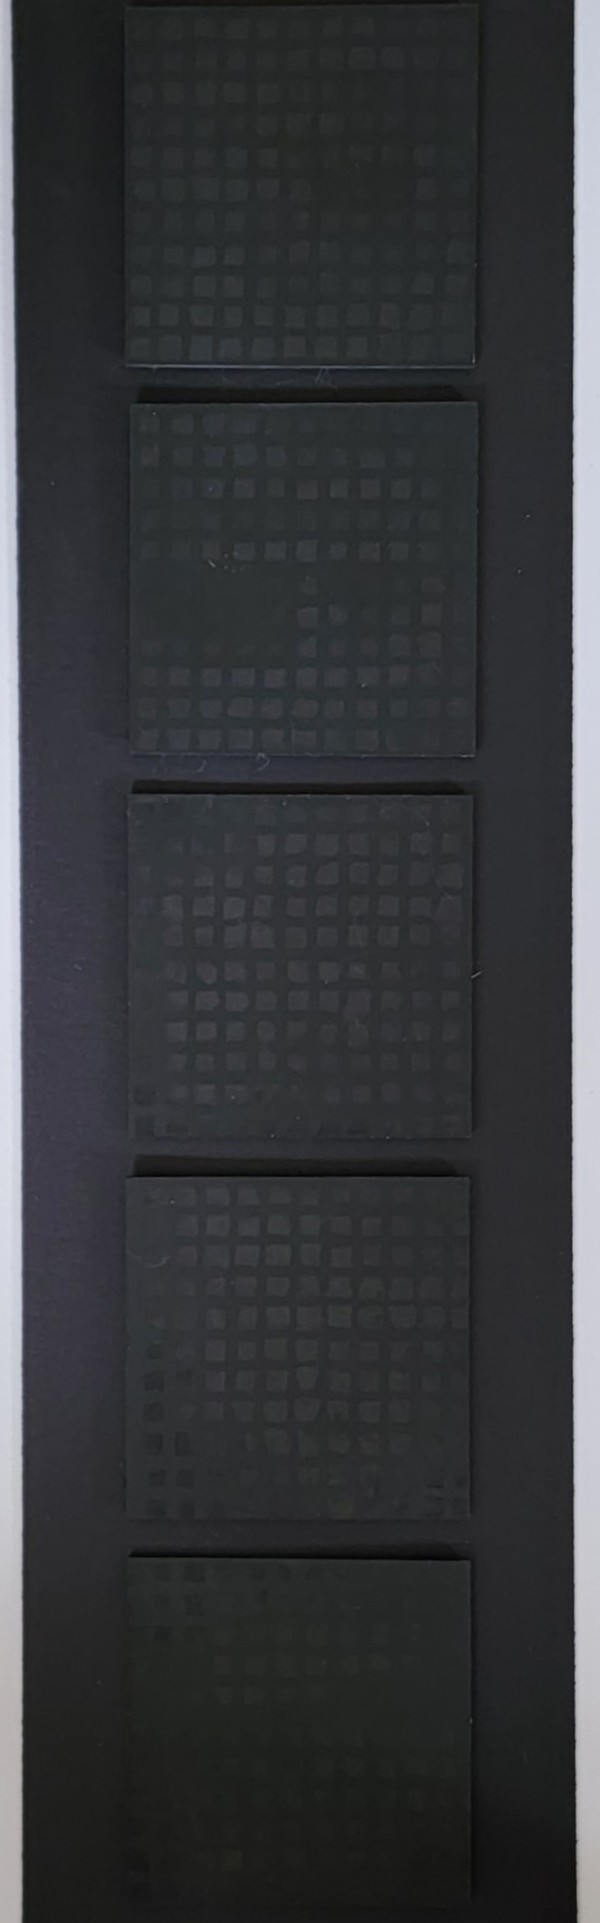 Black on Black Squares by Jude Barton